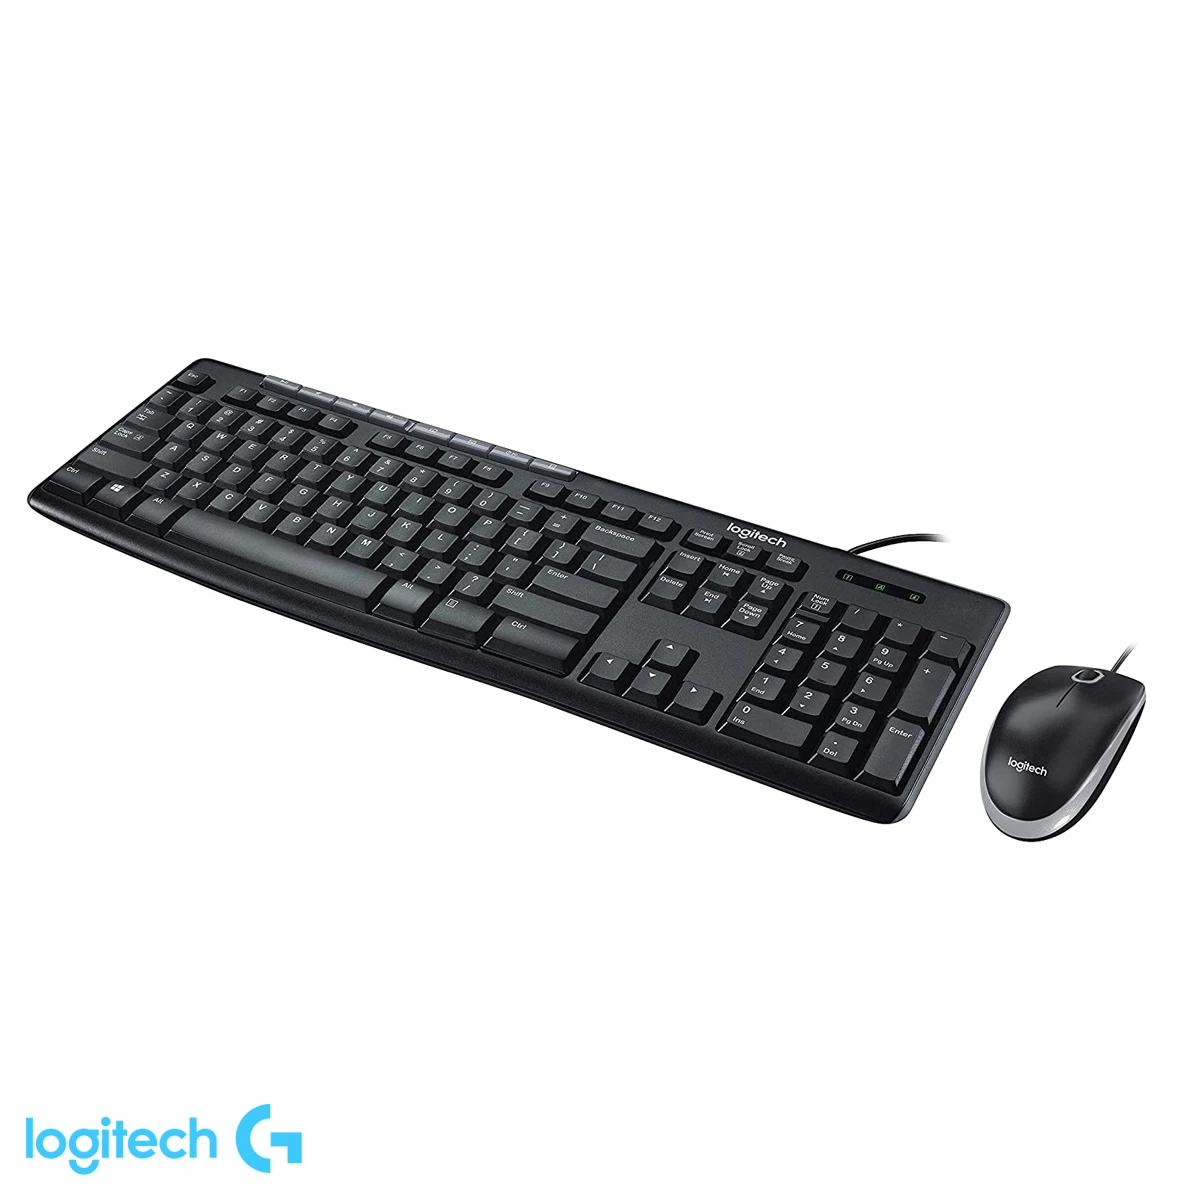 Combo de teclado y mouse Logitech MK200 Media USB Español